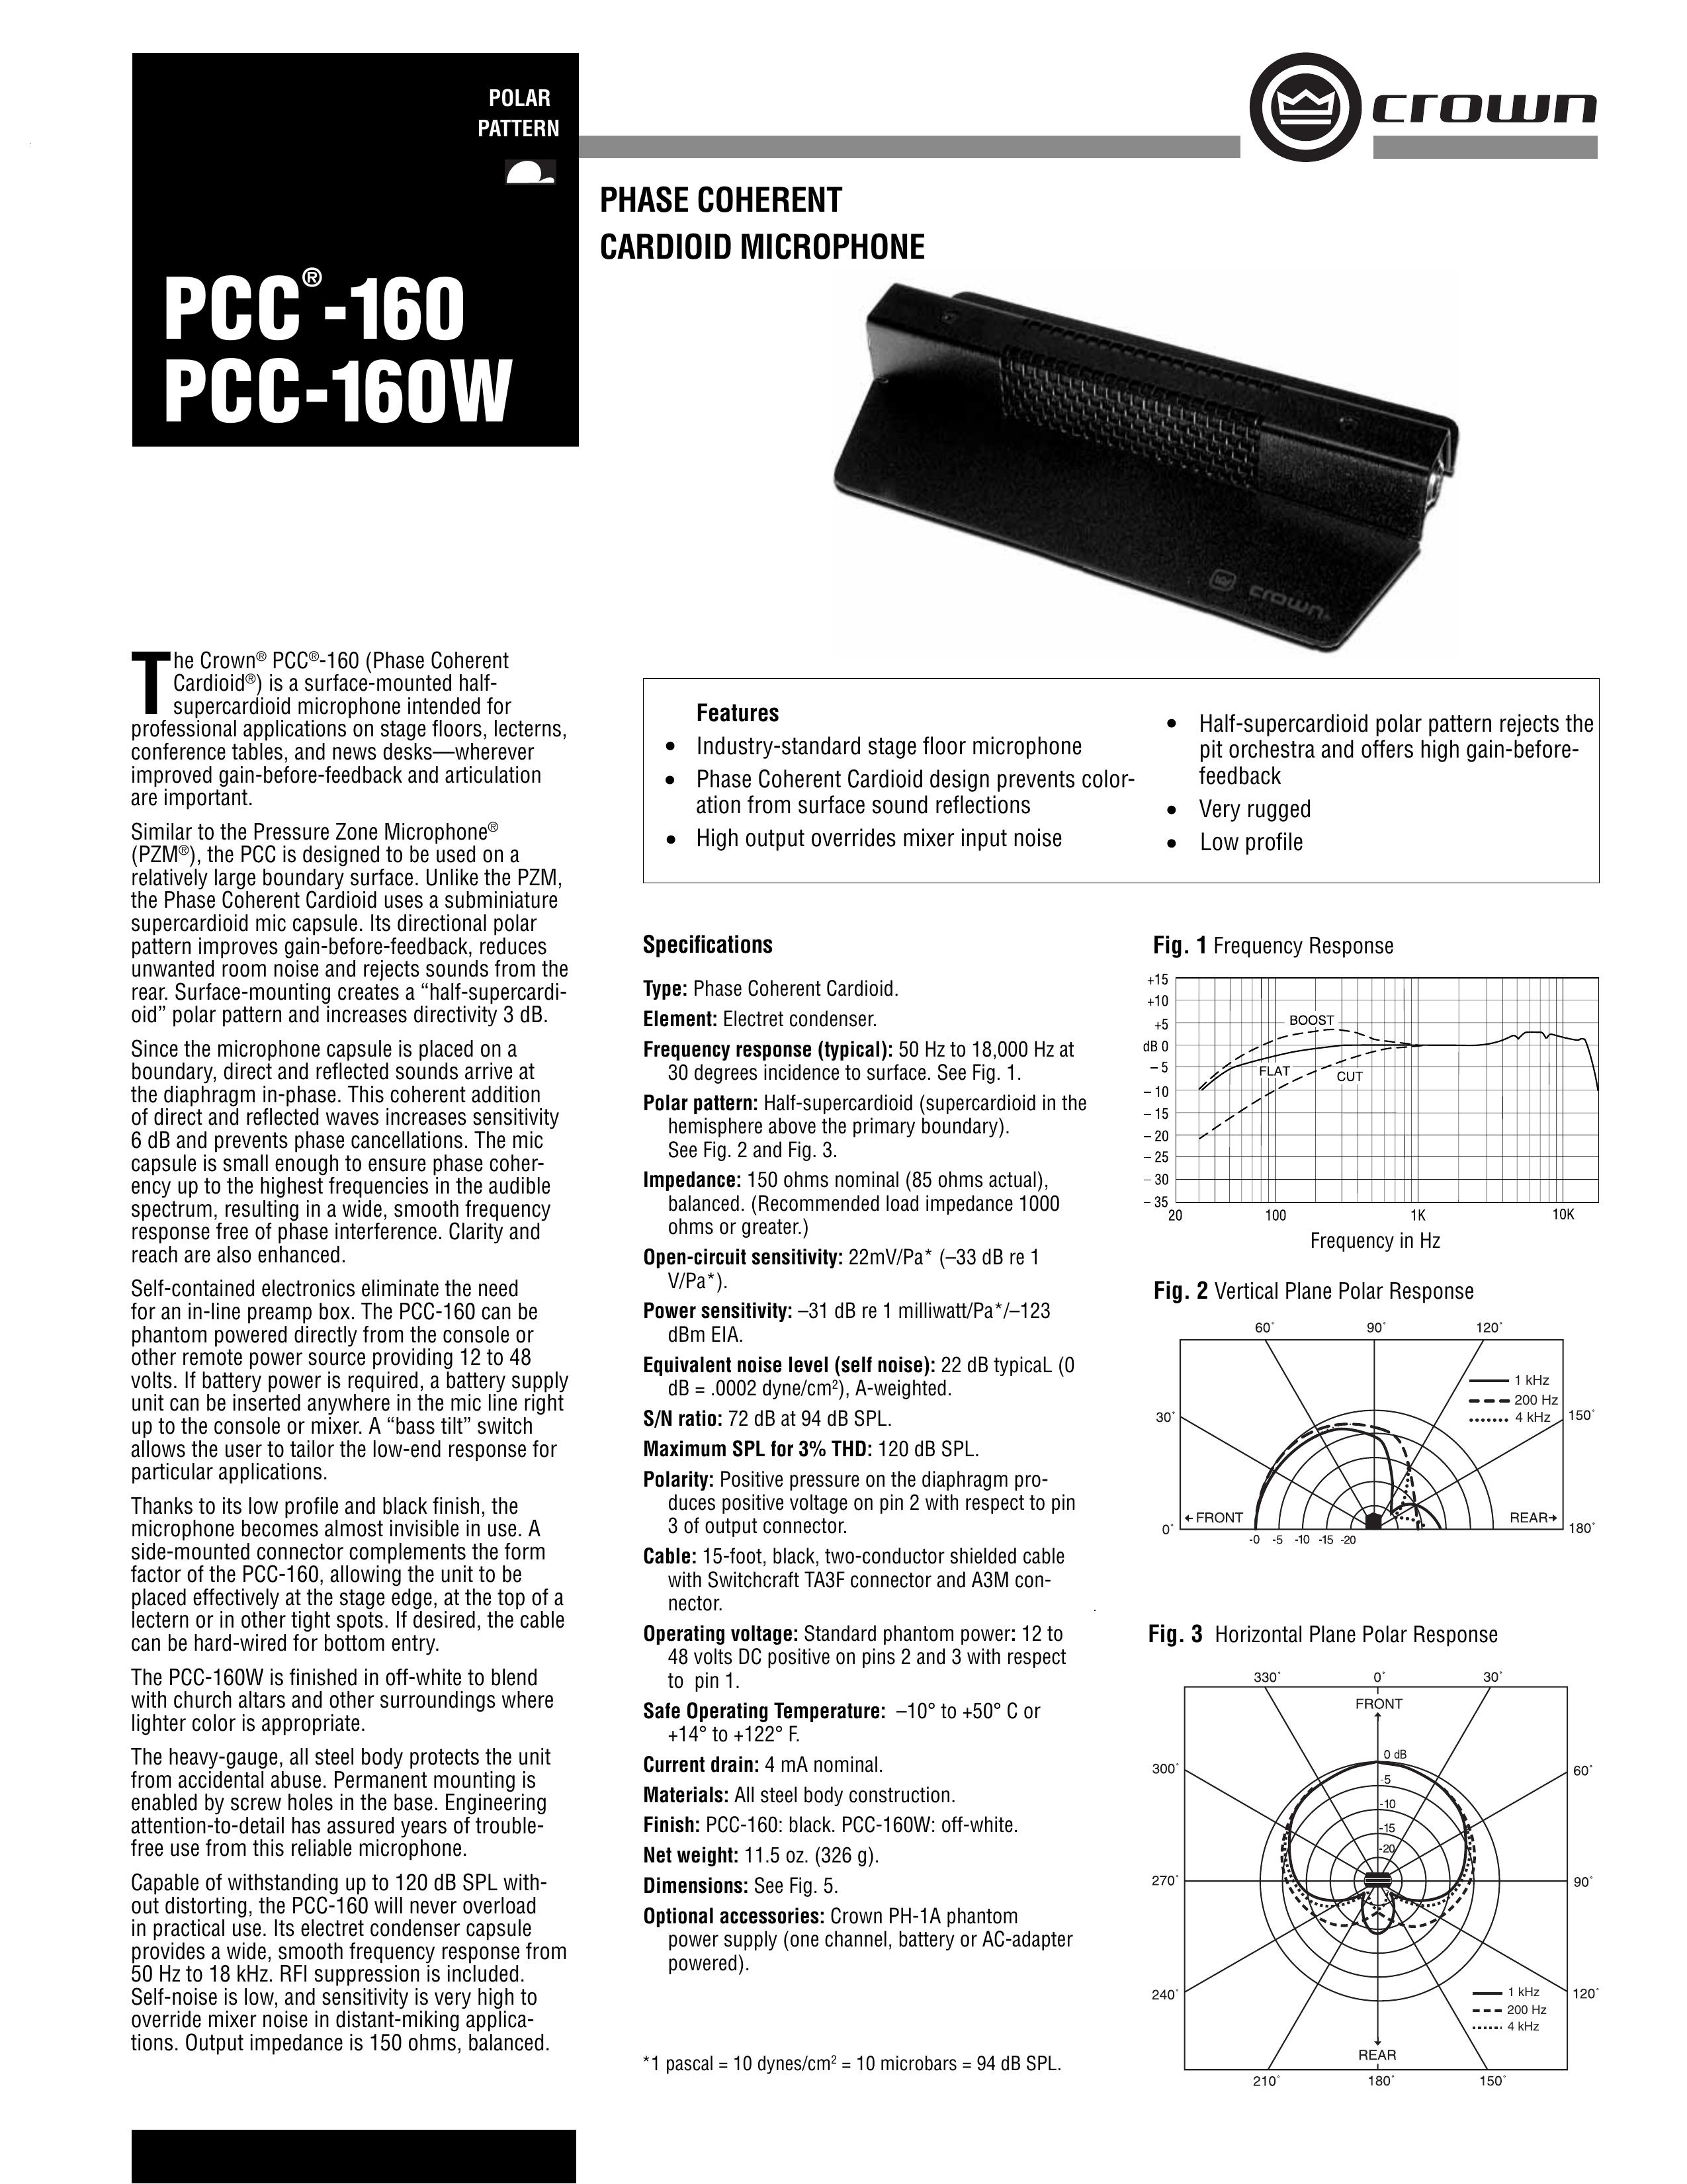 Crown Audio PCC-160W Microphone User Manual